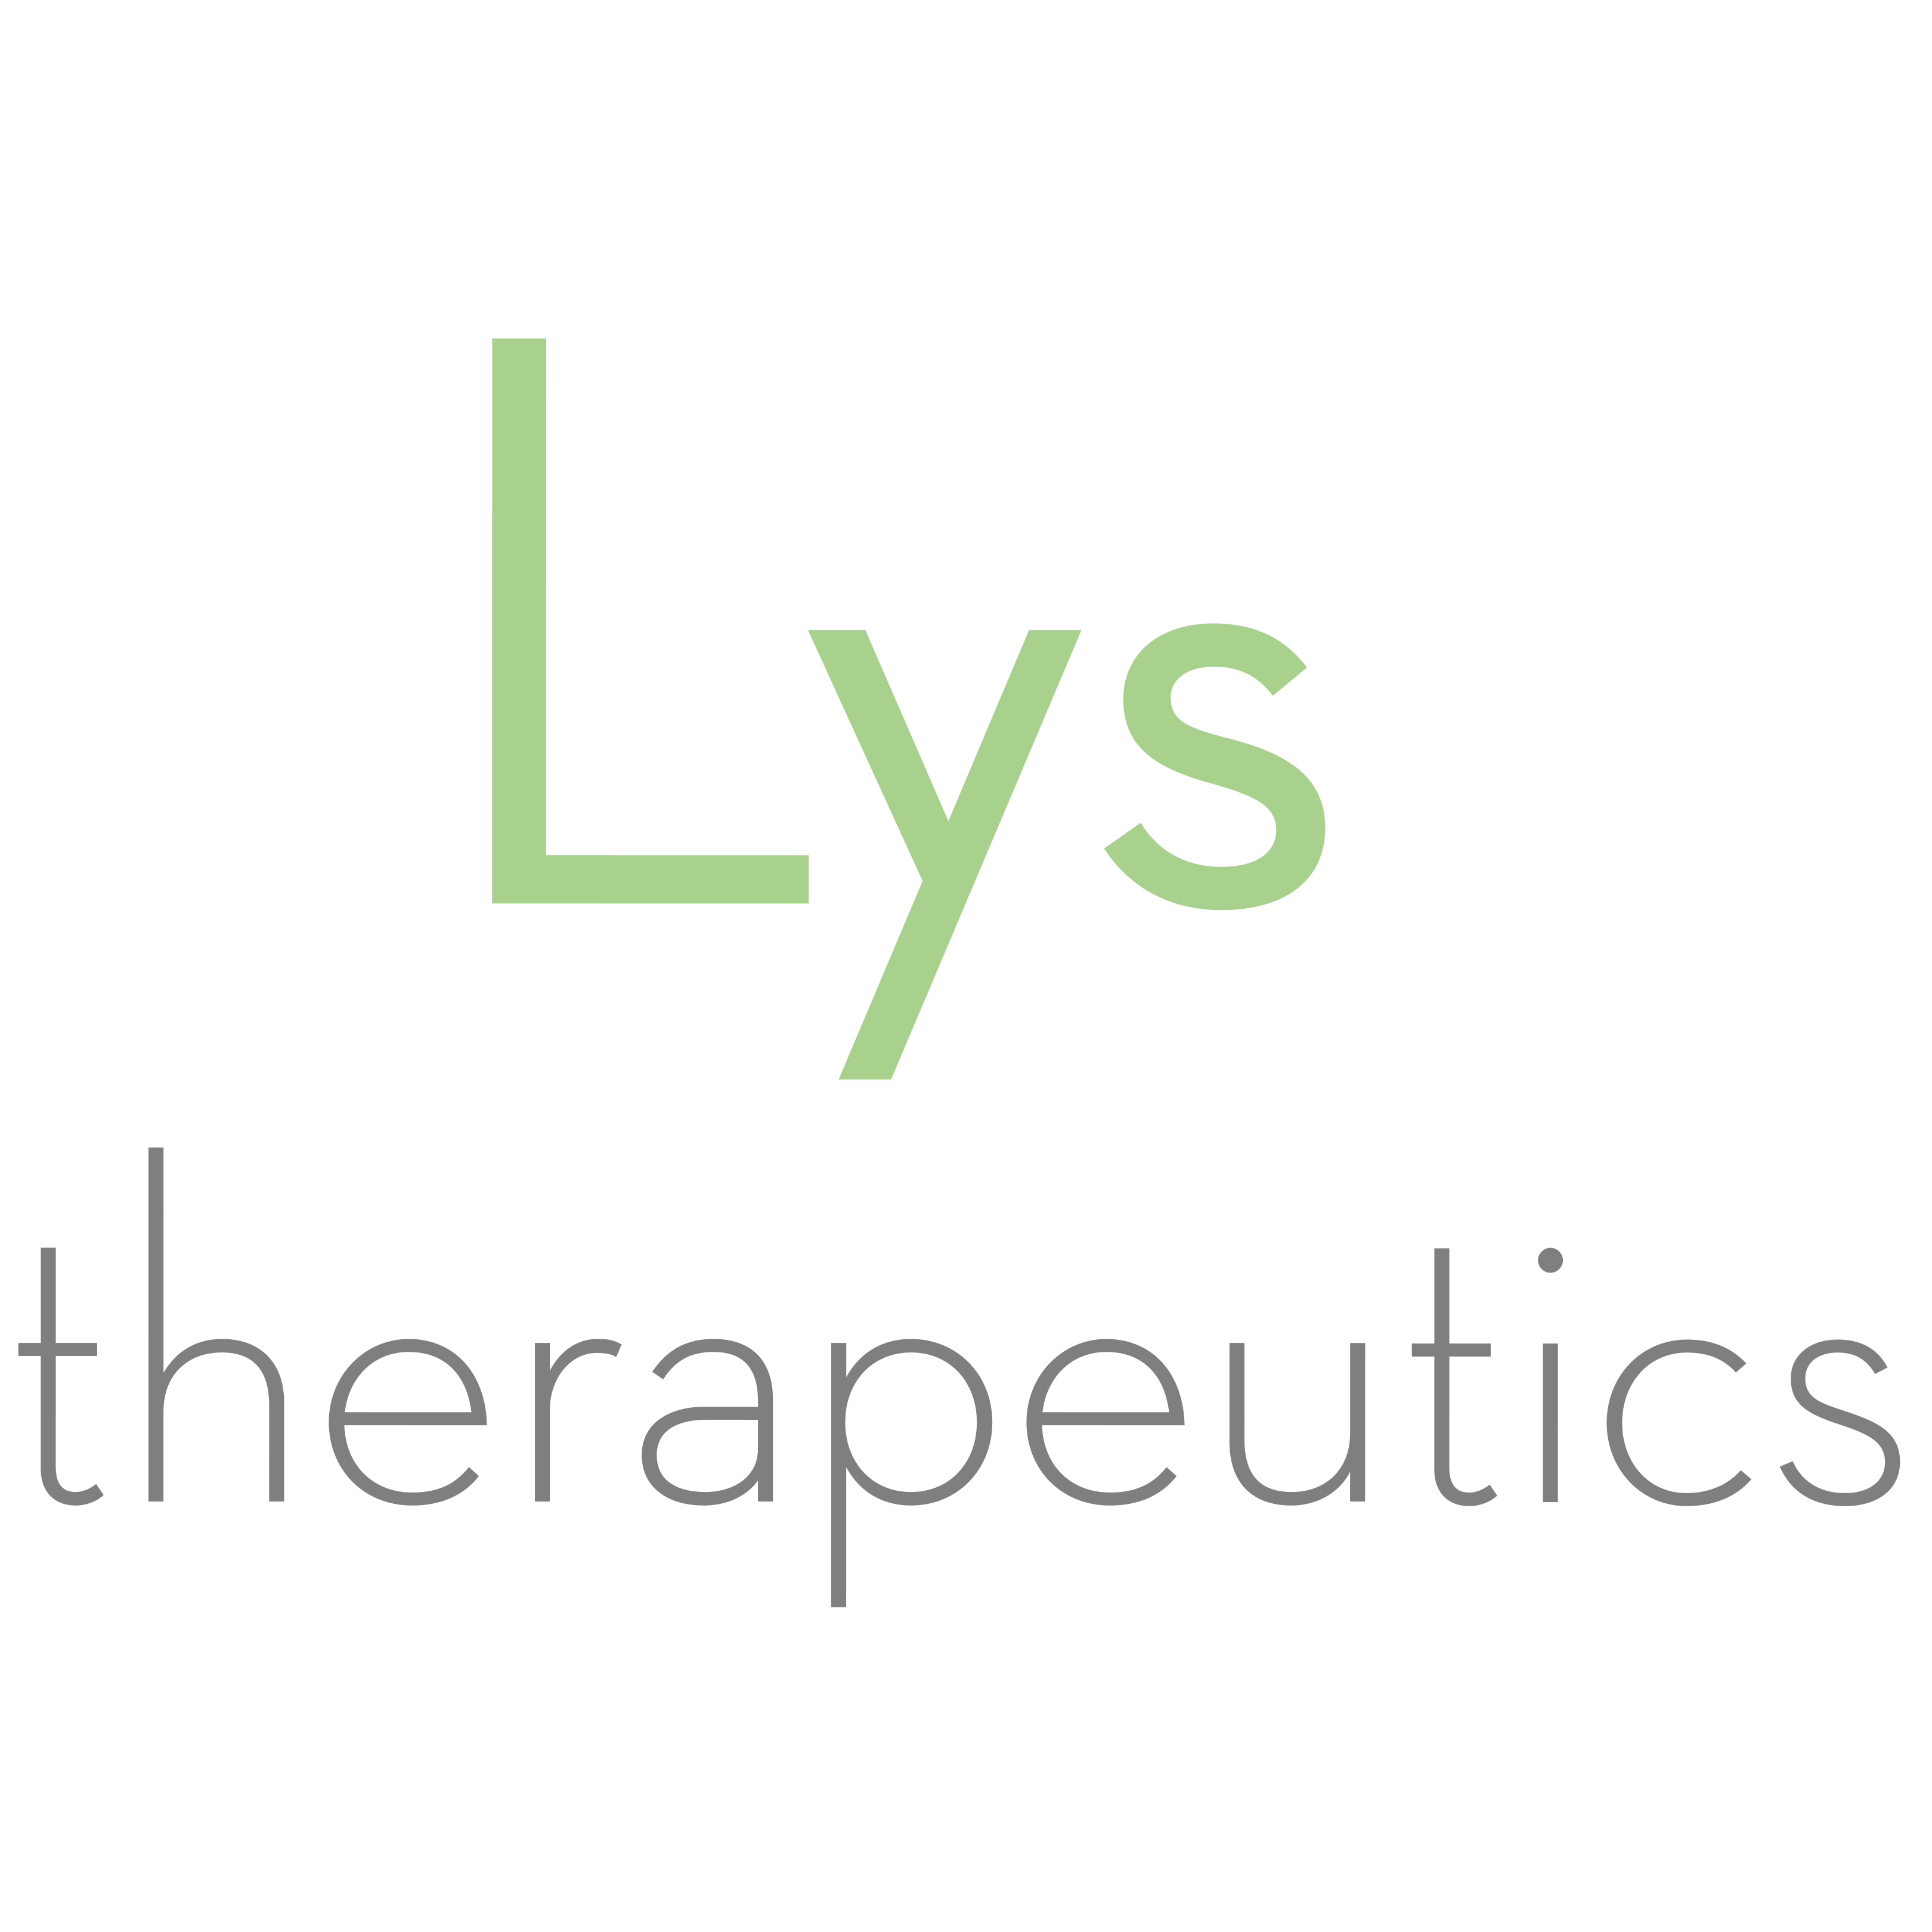 Lys Therapeutics